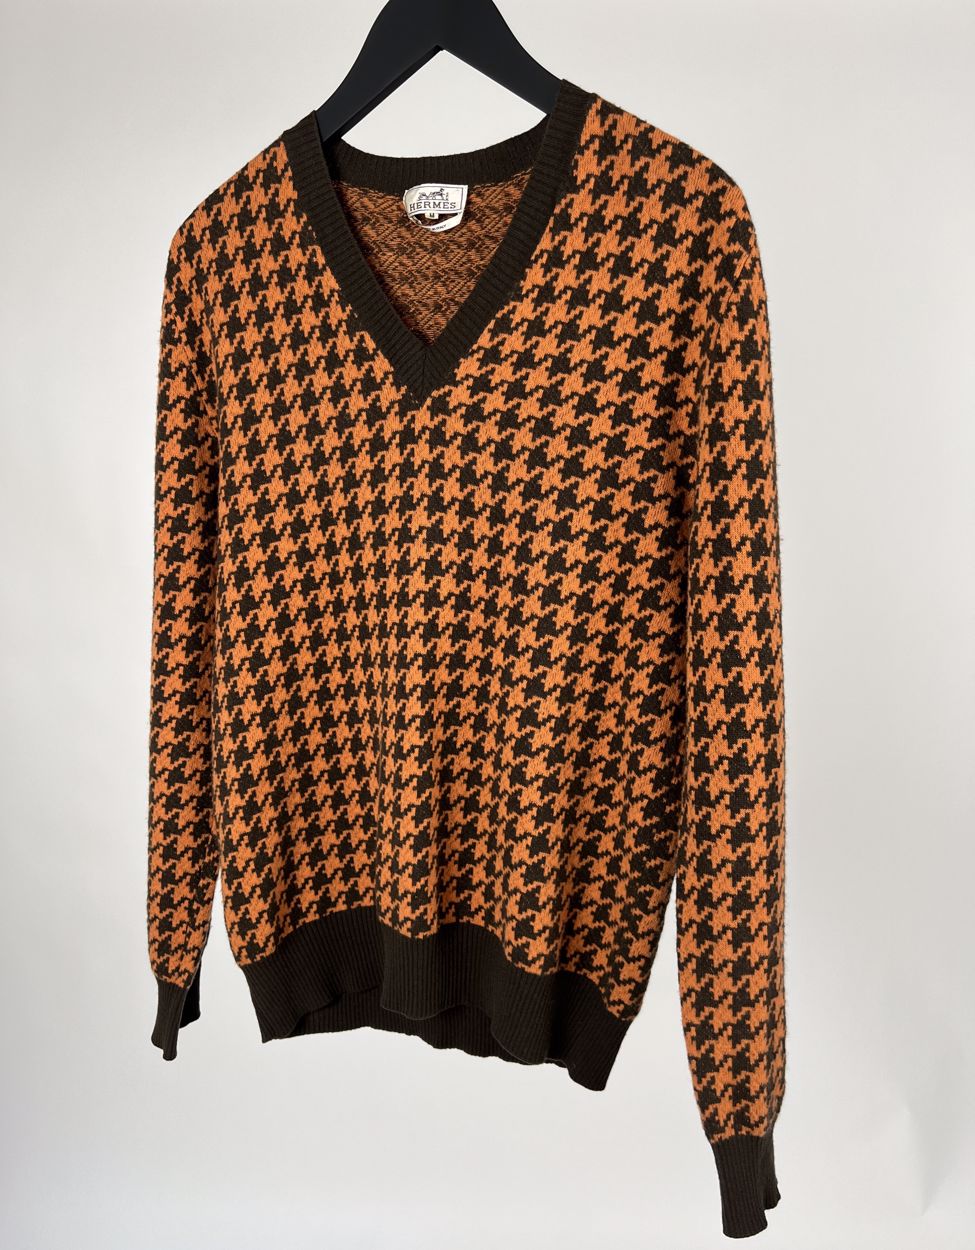 Hermes Knit orange/brown size M